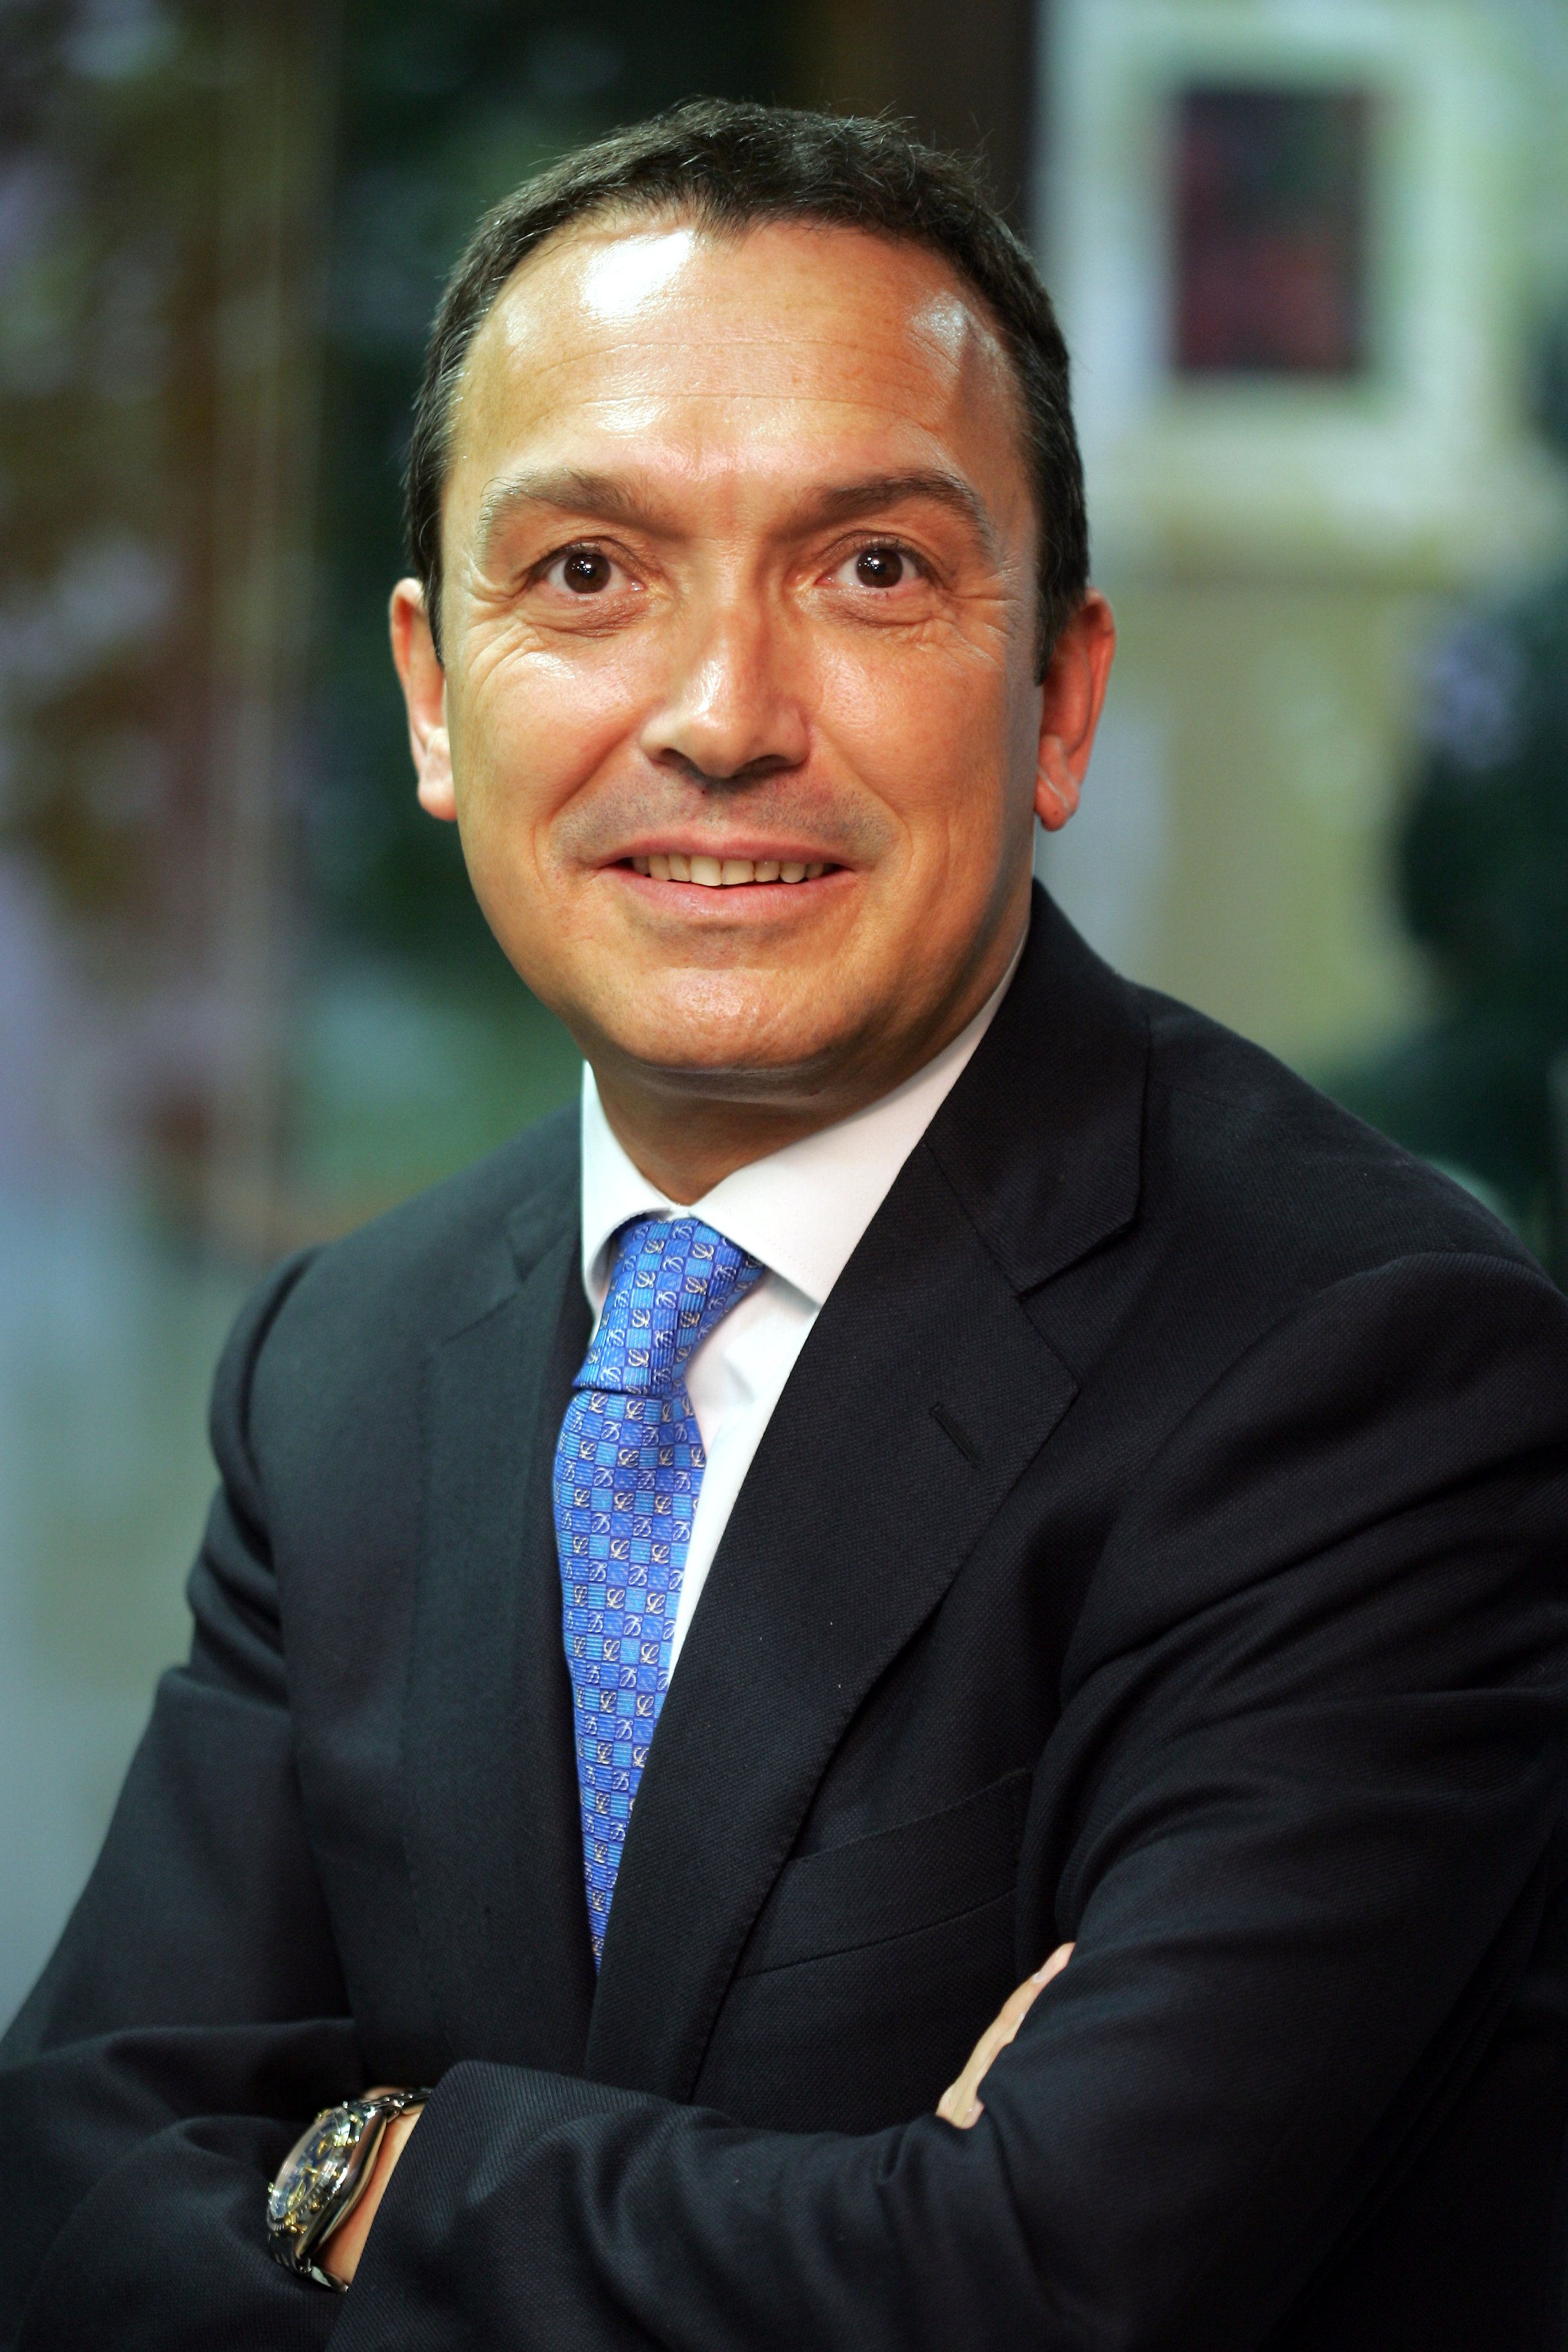 Juan Carlos Gallego Microbank Caixabank